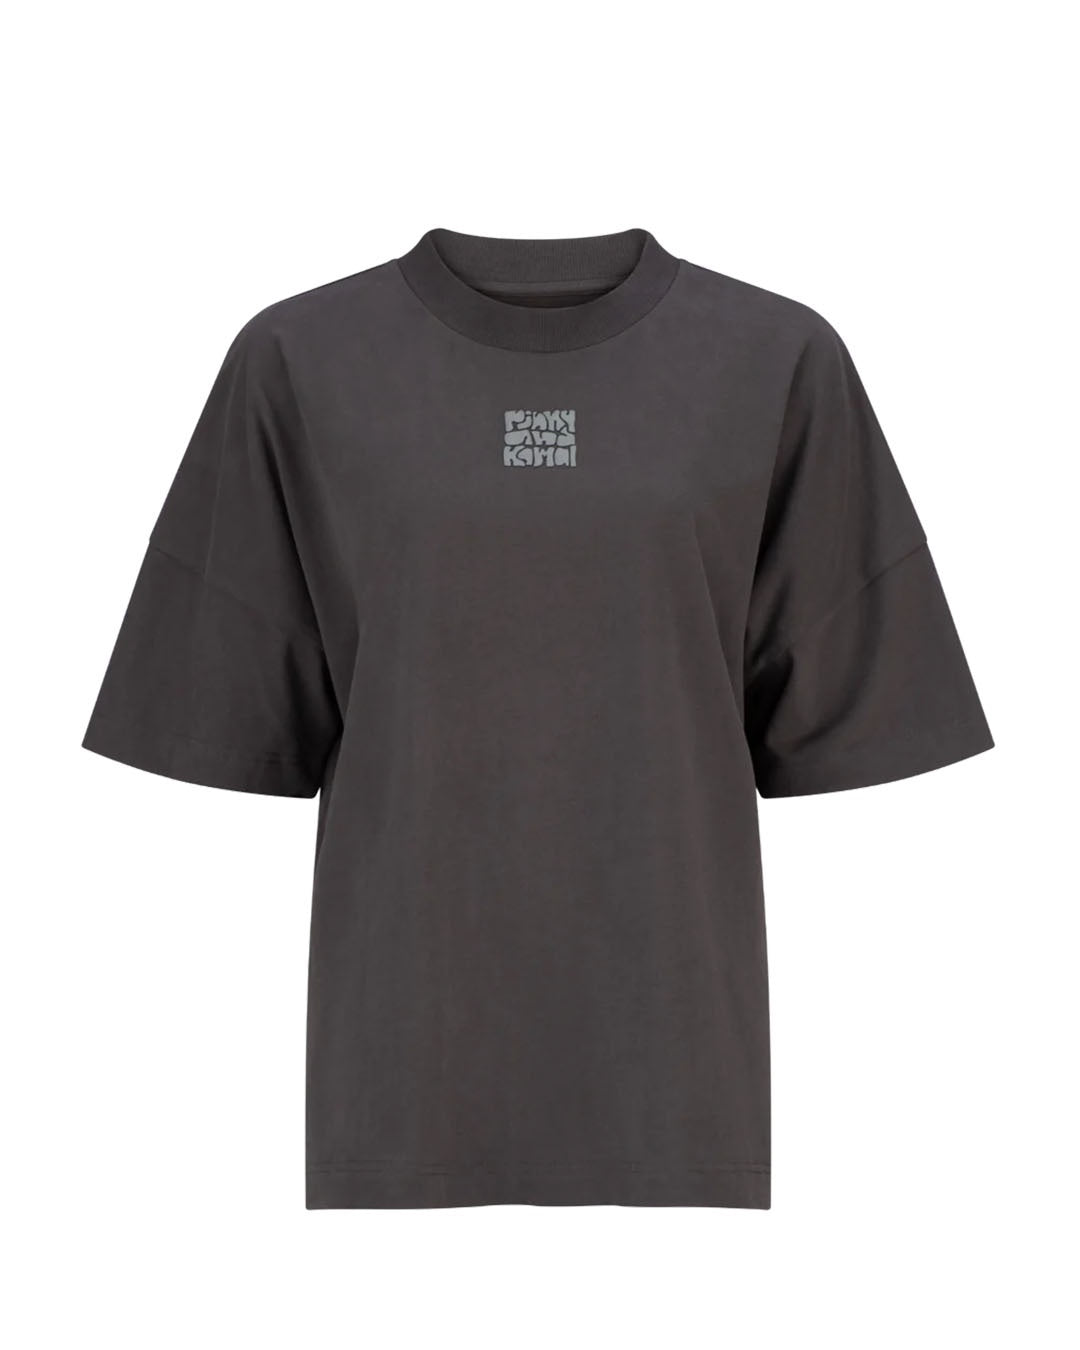 PK Bubble Logo T-Shirt - Slate Tanks &amp; Tees by Pinky &amp; Kamal - Prae Store